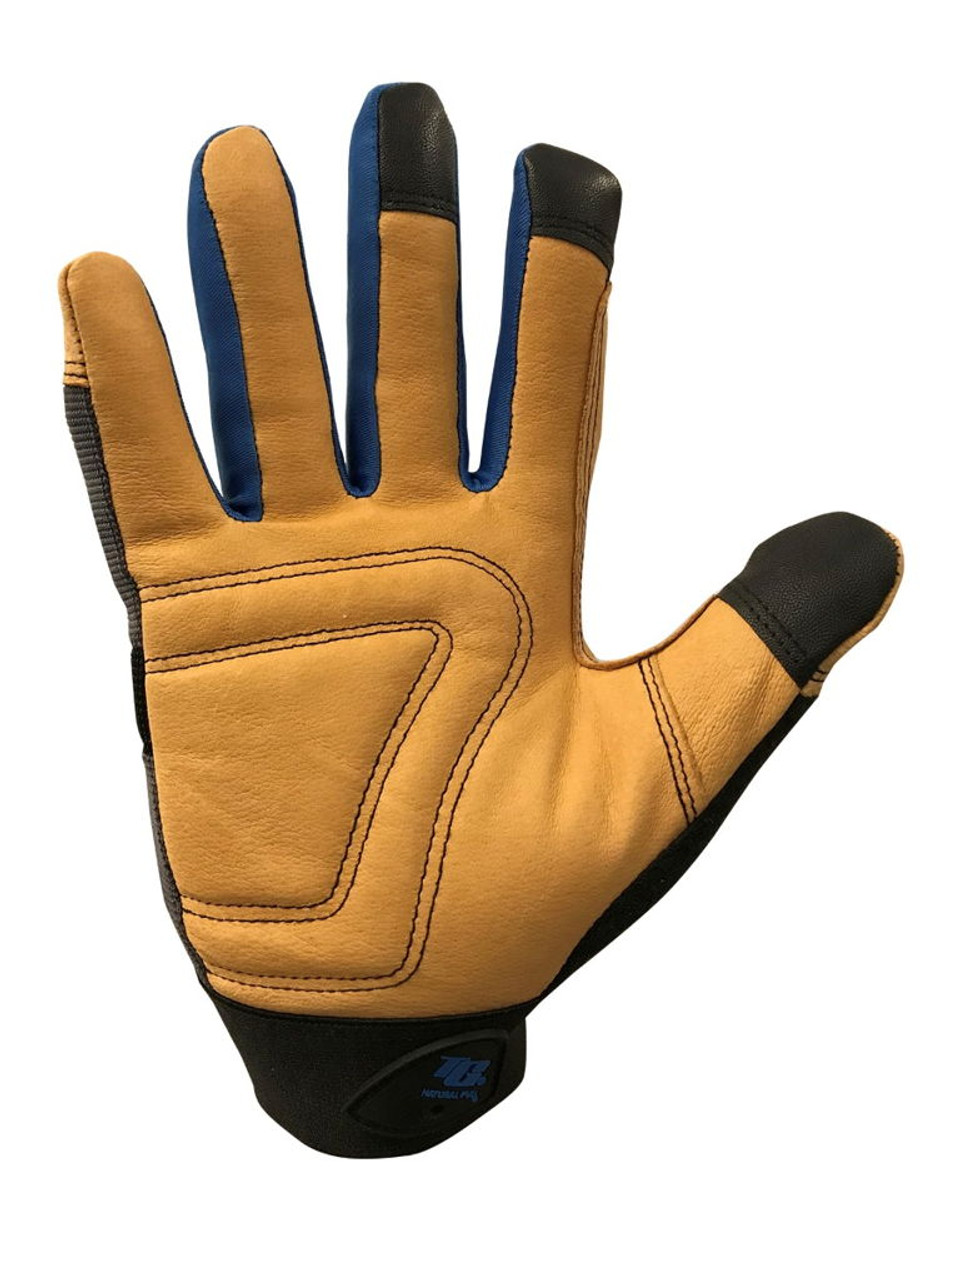 True Grip General Purpose Work Gloves, Touchscreen Compatible